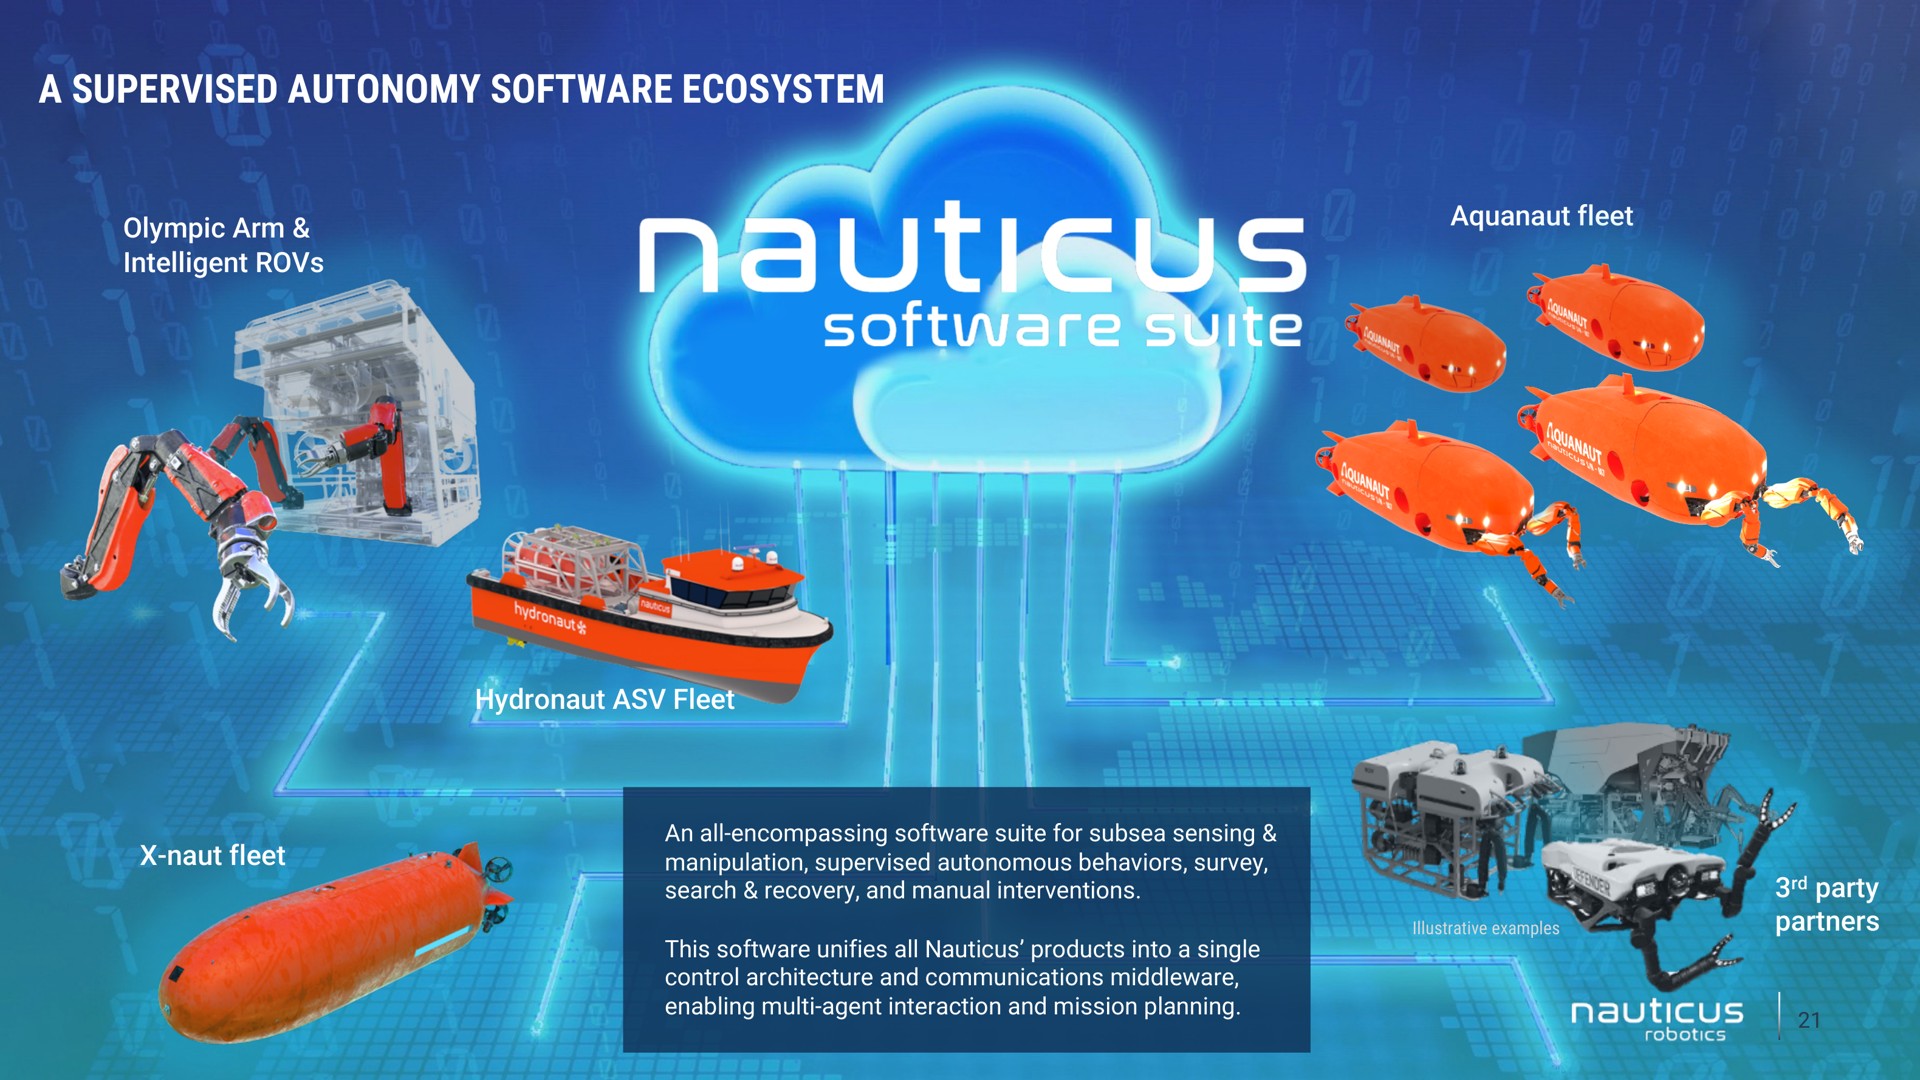 a supervised autonomy ecosystem | Nauticus